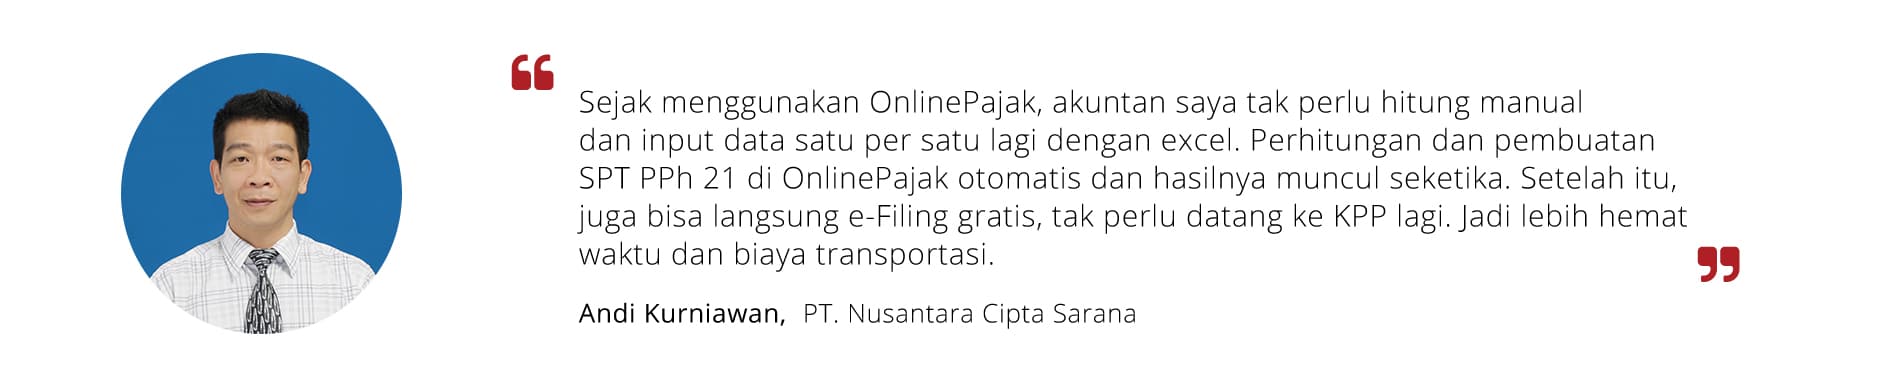 testimoni PT Nusantara Cipta Sarana tentang fitur PPh 21 OnlinePajak